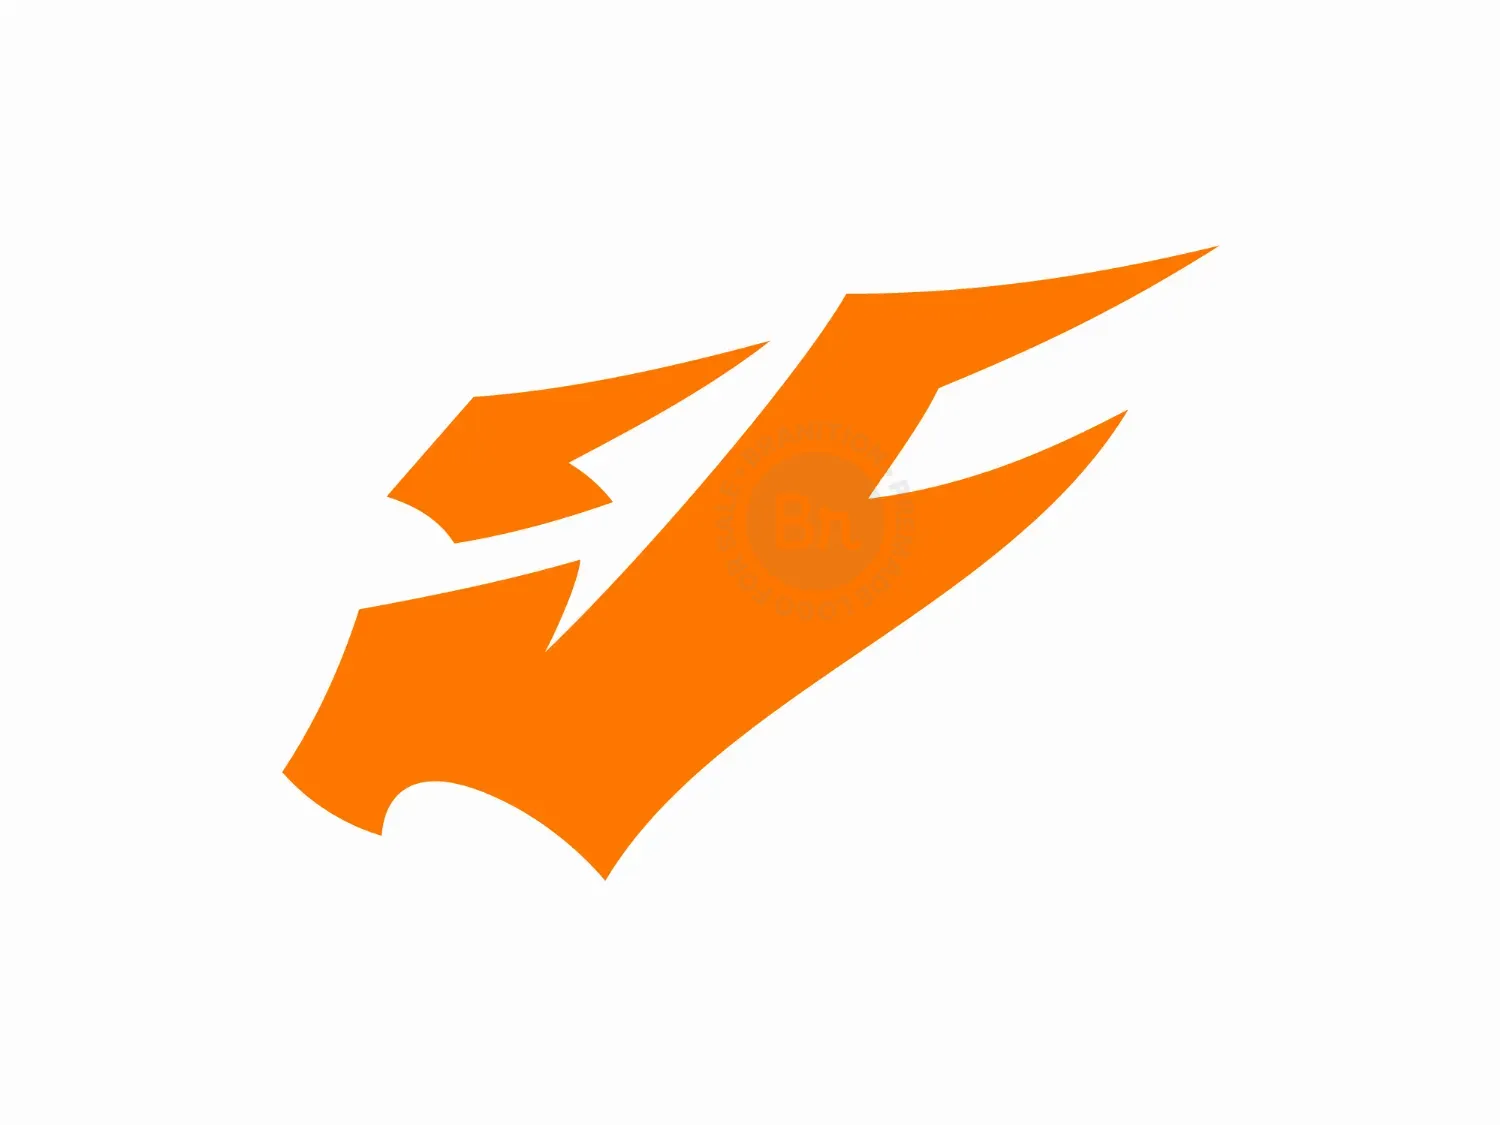 Minimalist Abstract Swooping Eagle/Falcon/Hawk Logo Design